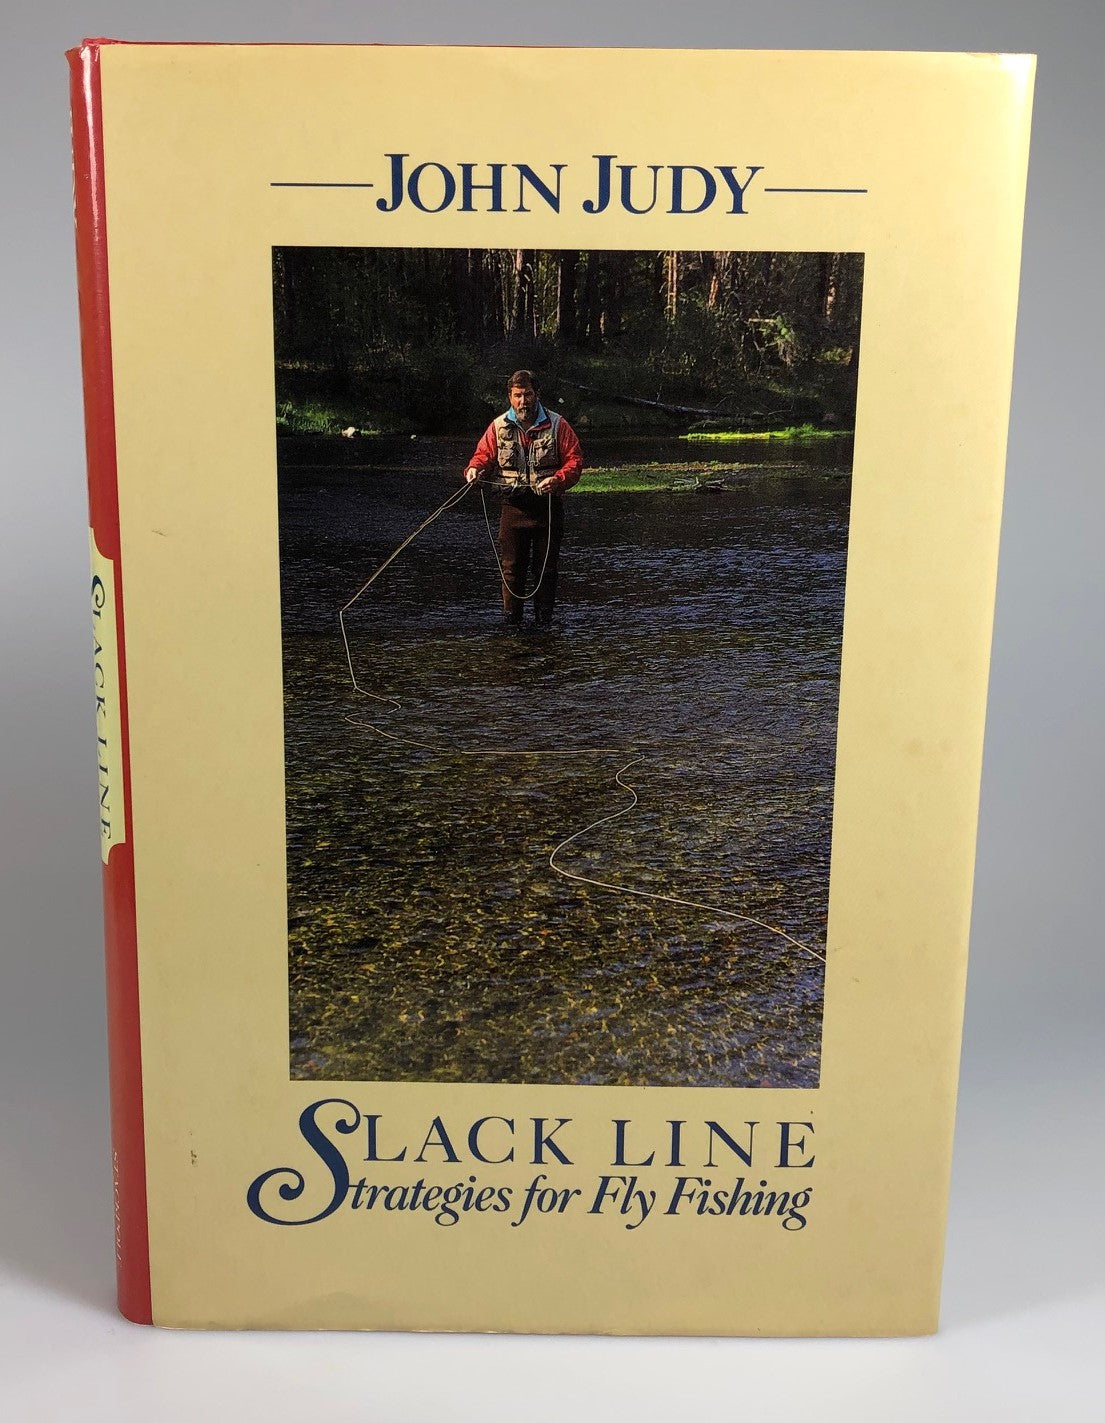 Slack Line-Strategies for Fly Fishing by John Judy